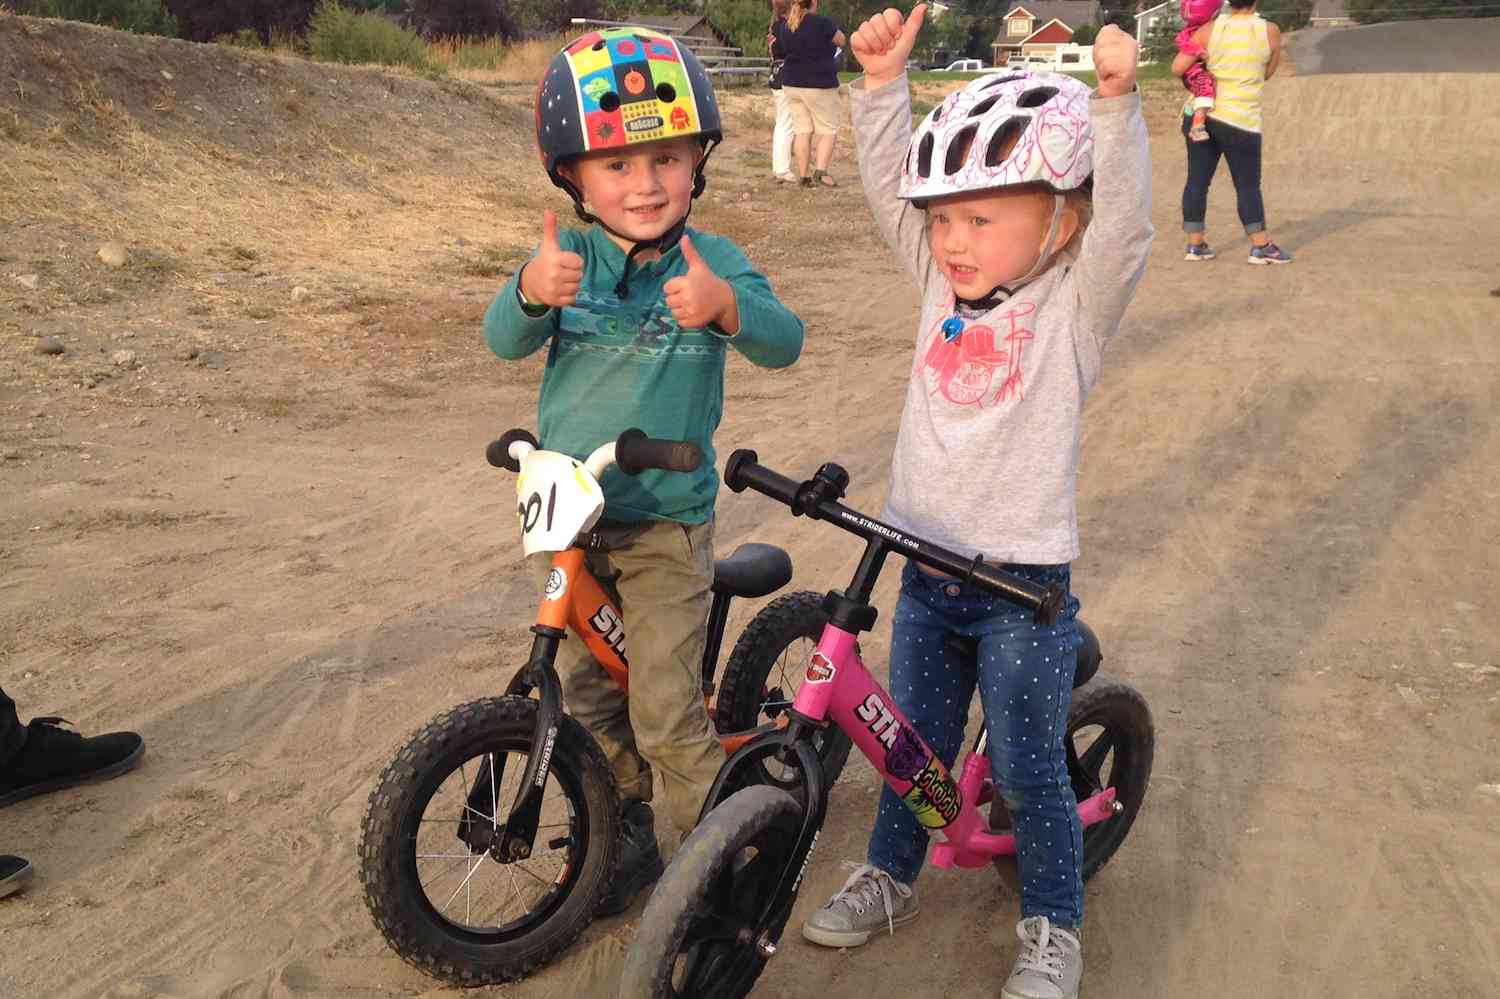 A boy and girl on 12" Strider balance bikes